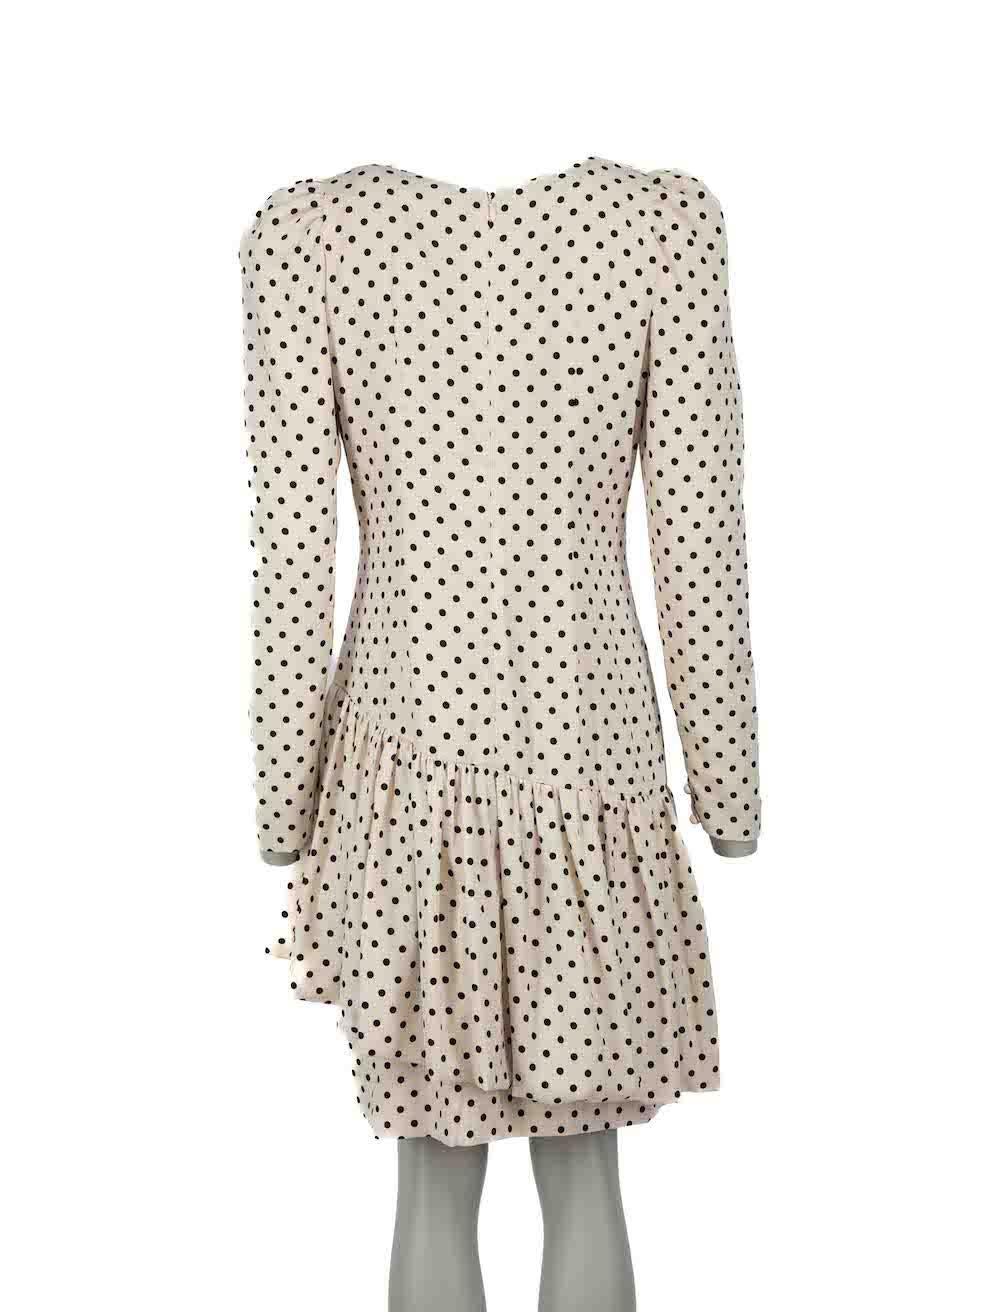 Rejina Pyo Cream Polkadot Asymmetric Hem Dress Size M In New Condition For Sale In London, GB